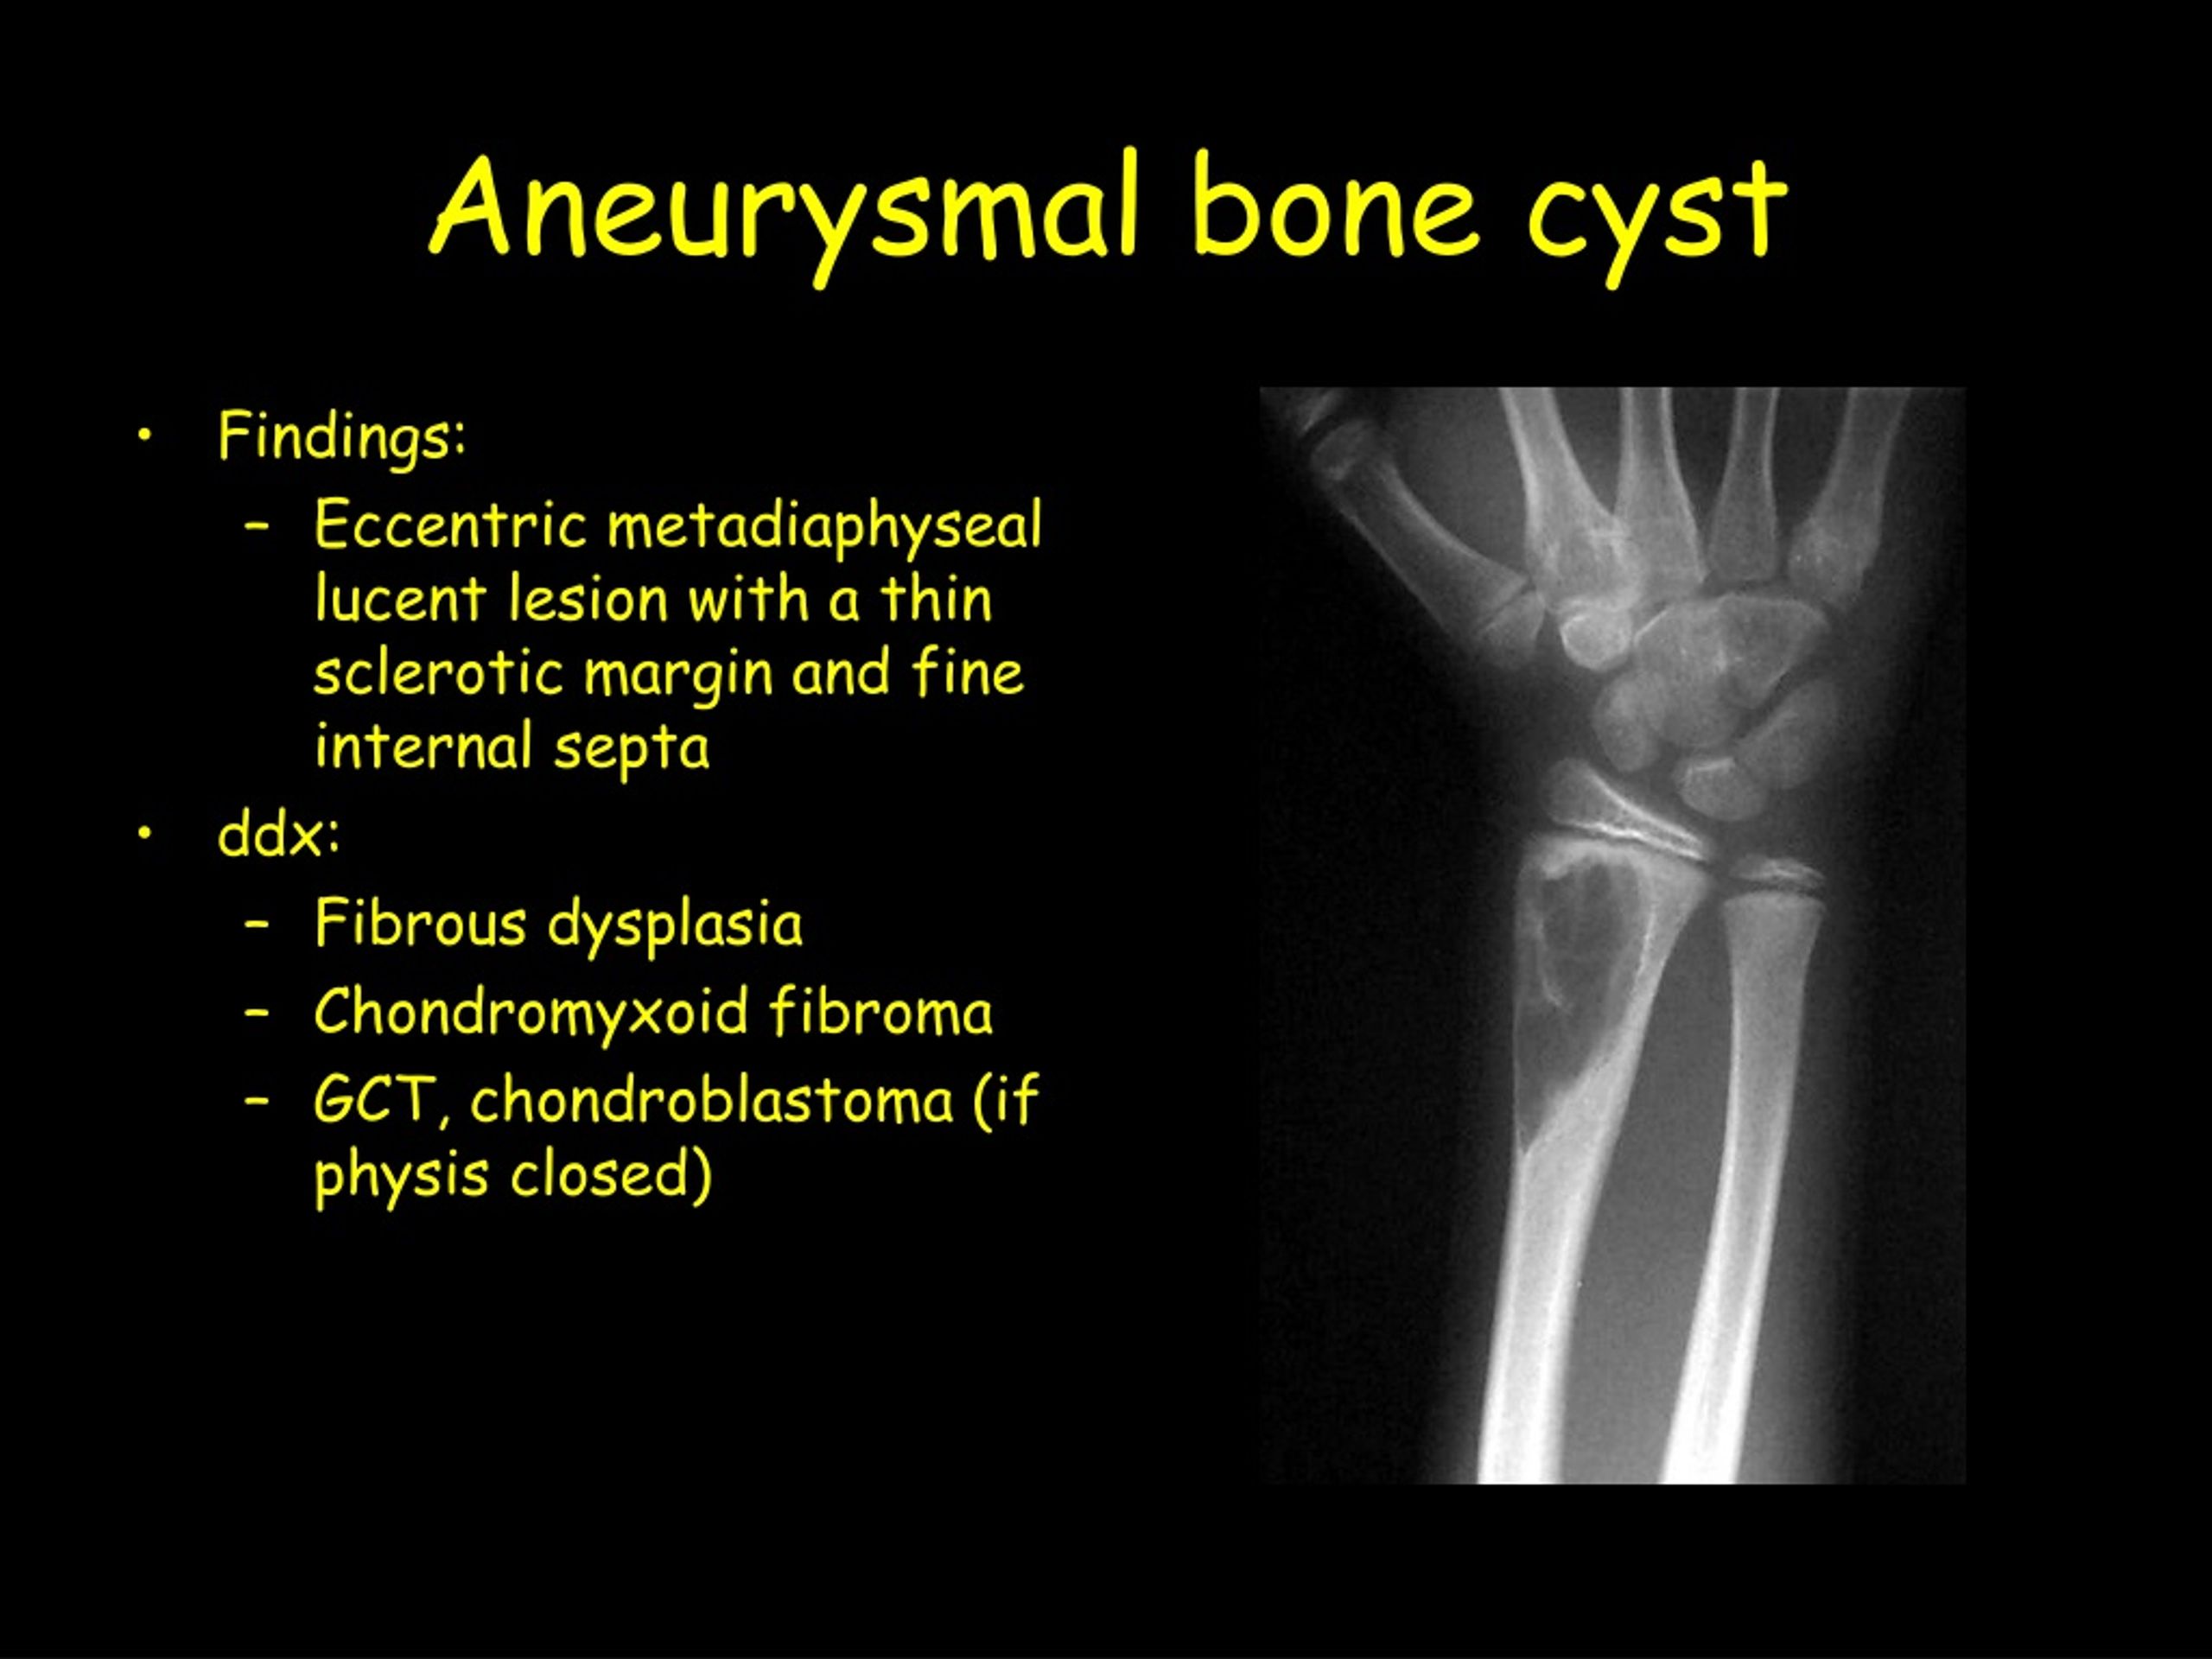 Ppt Aneurysmal Bone Cyst Powerpoint Presentation Free Download Id162070 5229